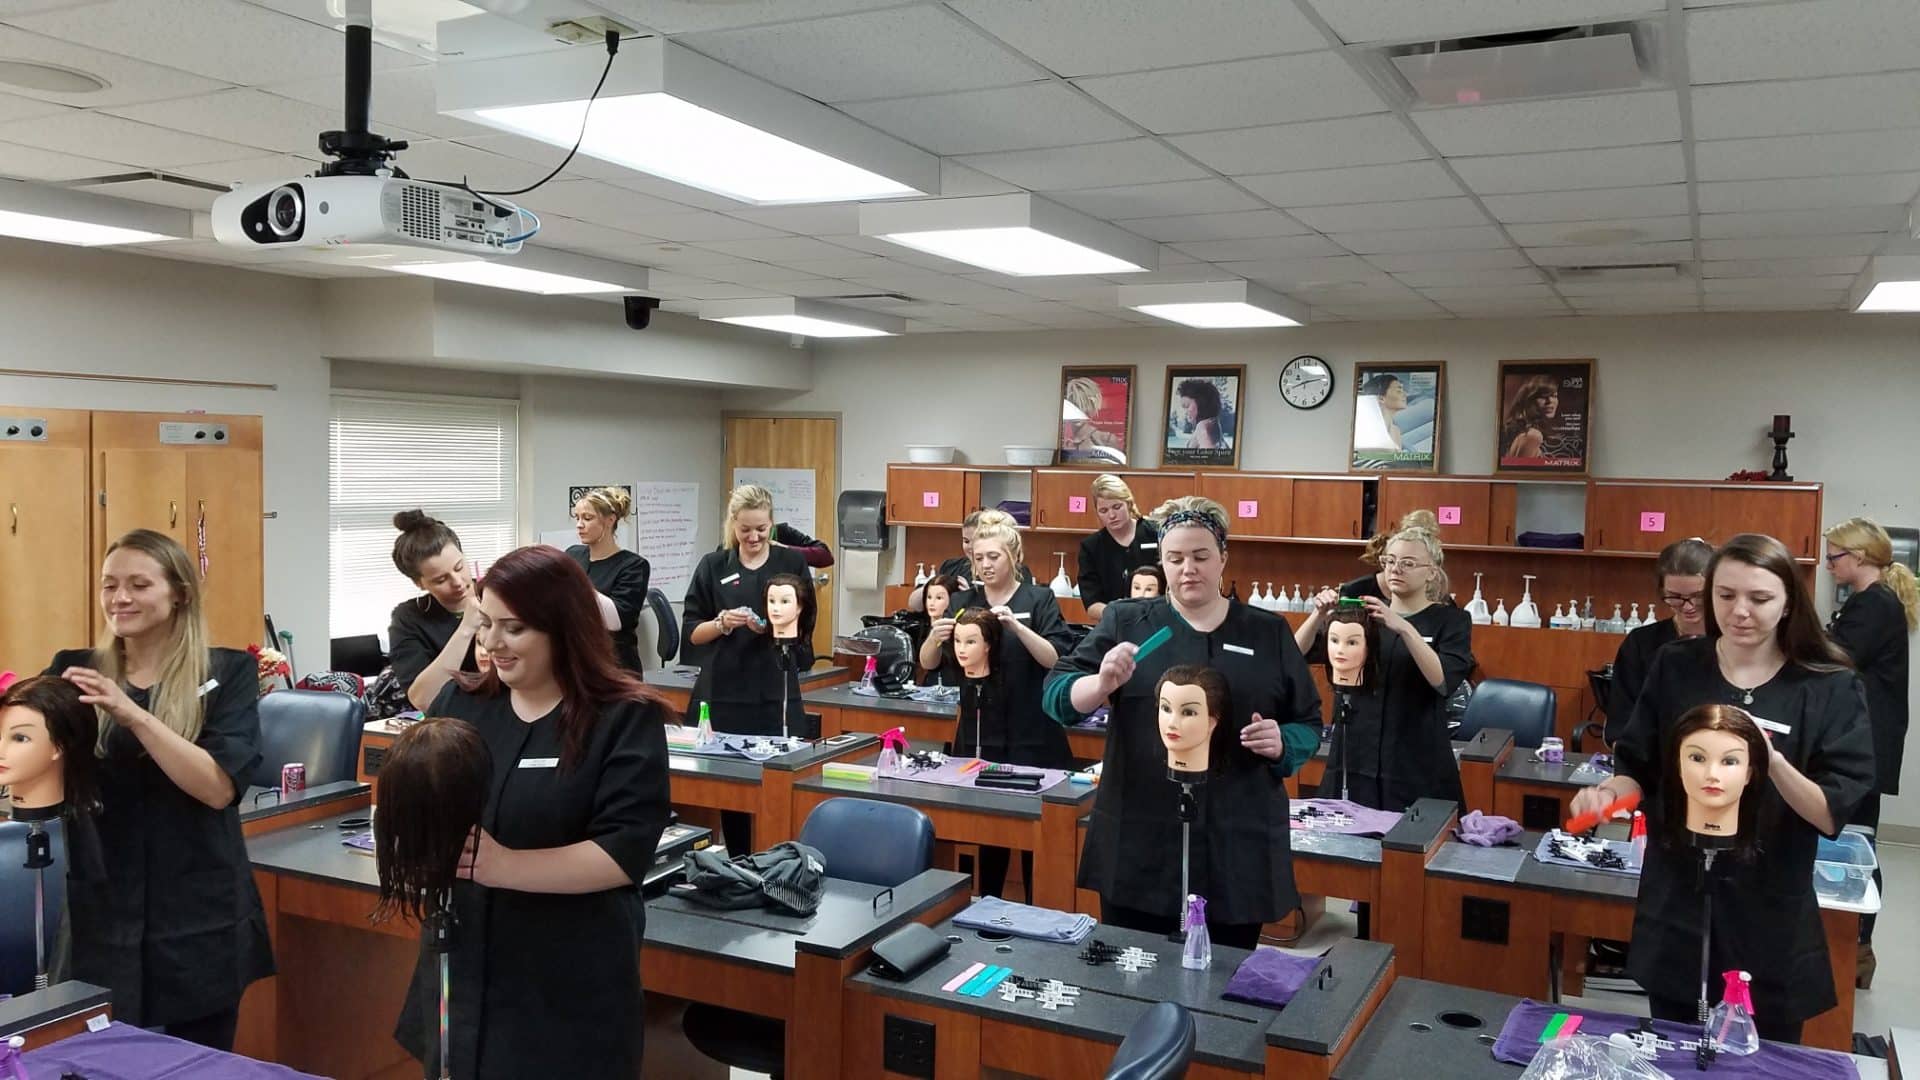 Cosmo students testing on manikin heads